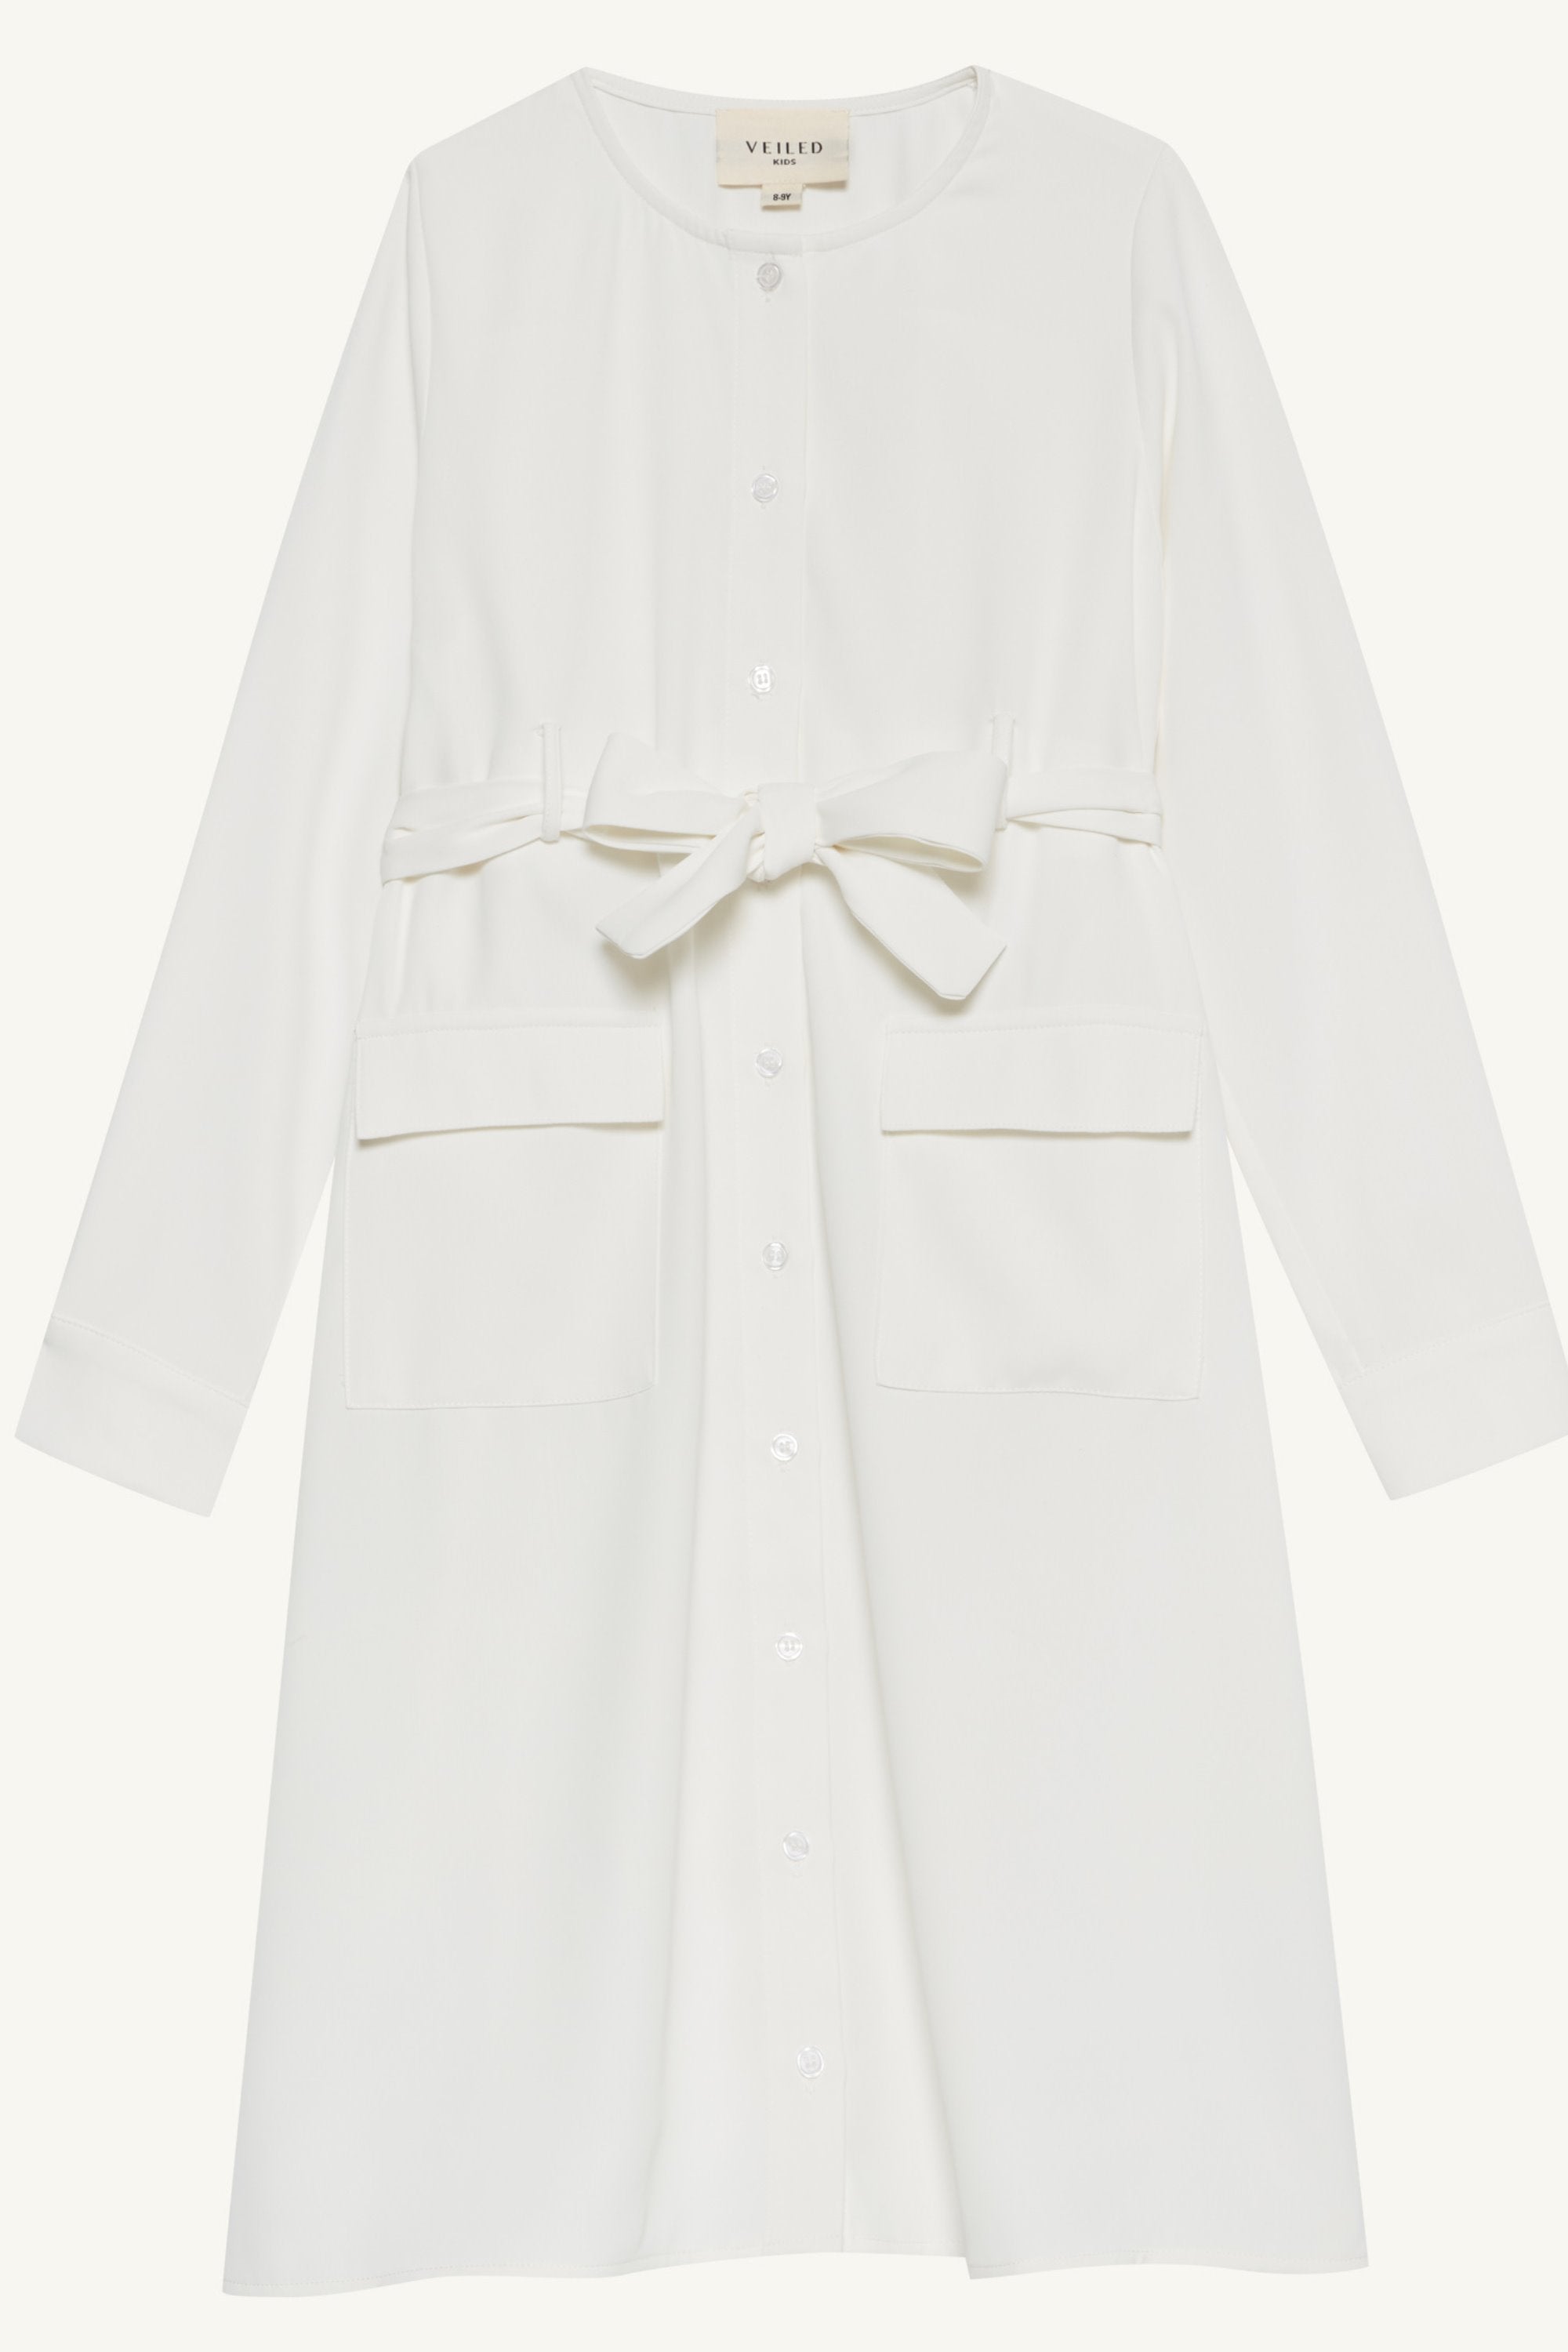 Olivia Button Down Utility Dress - White (Girls) Clothing Veiled 